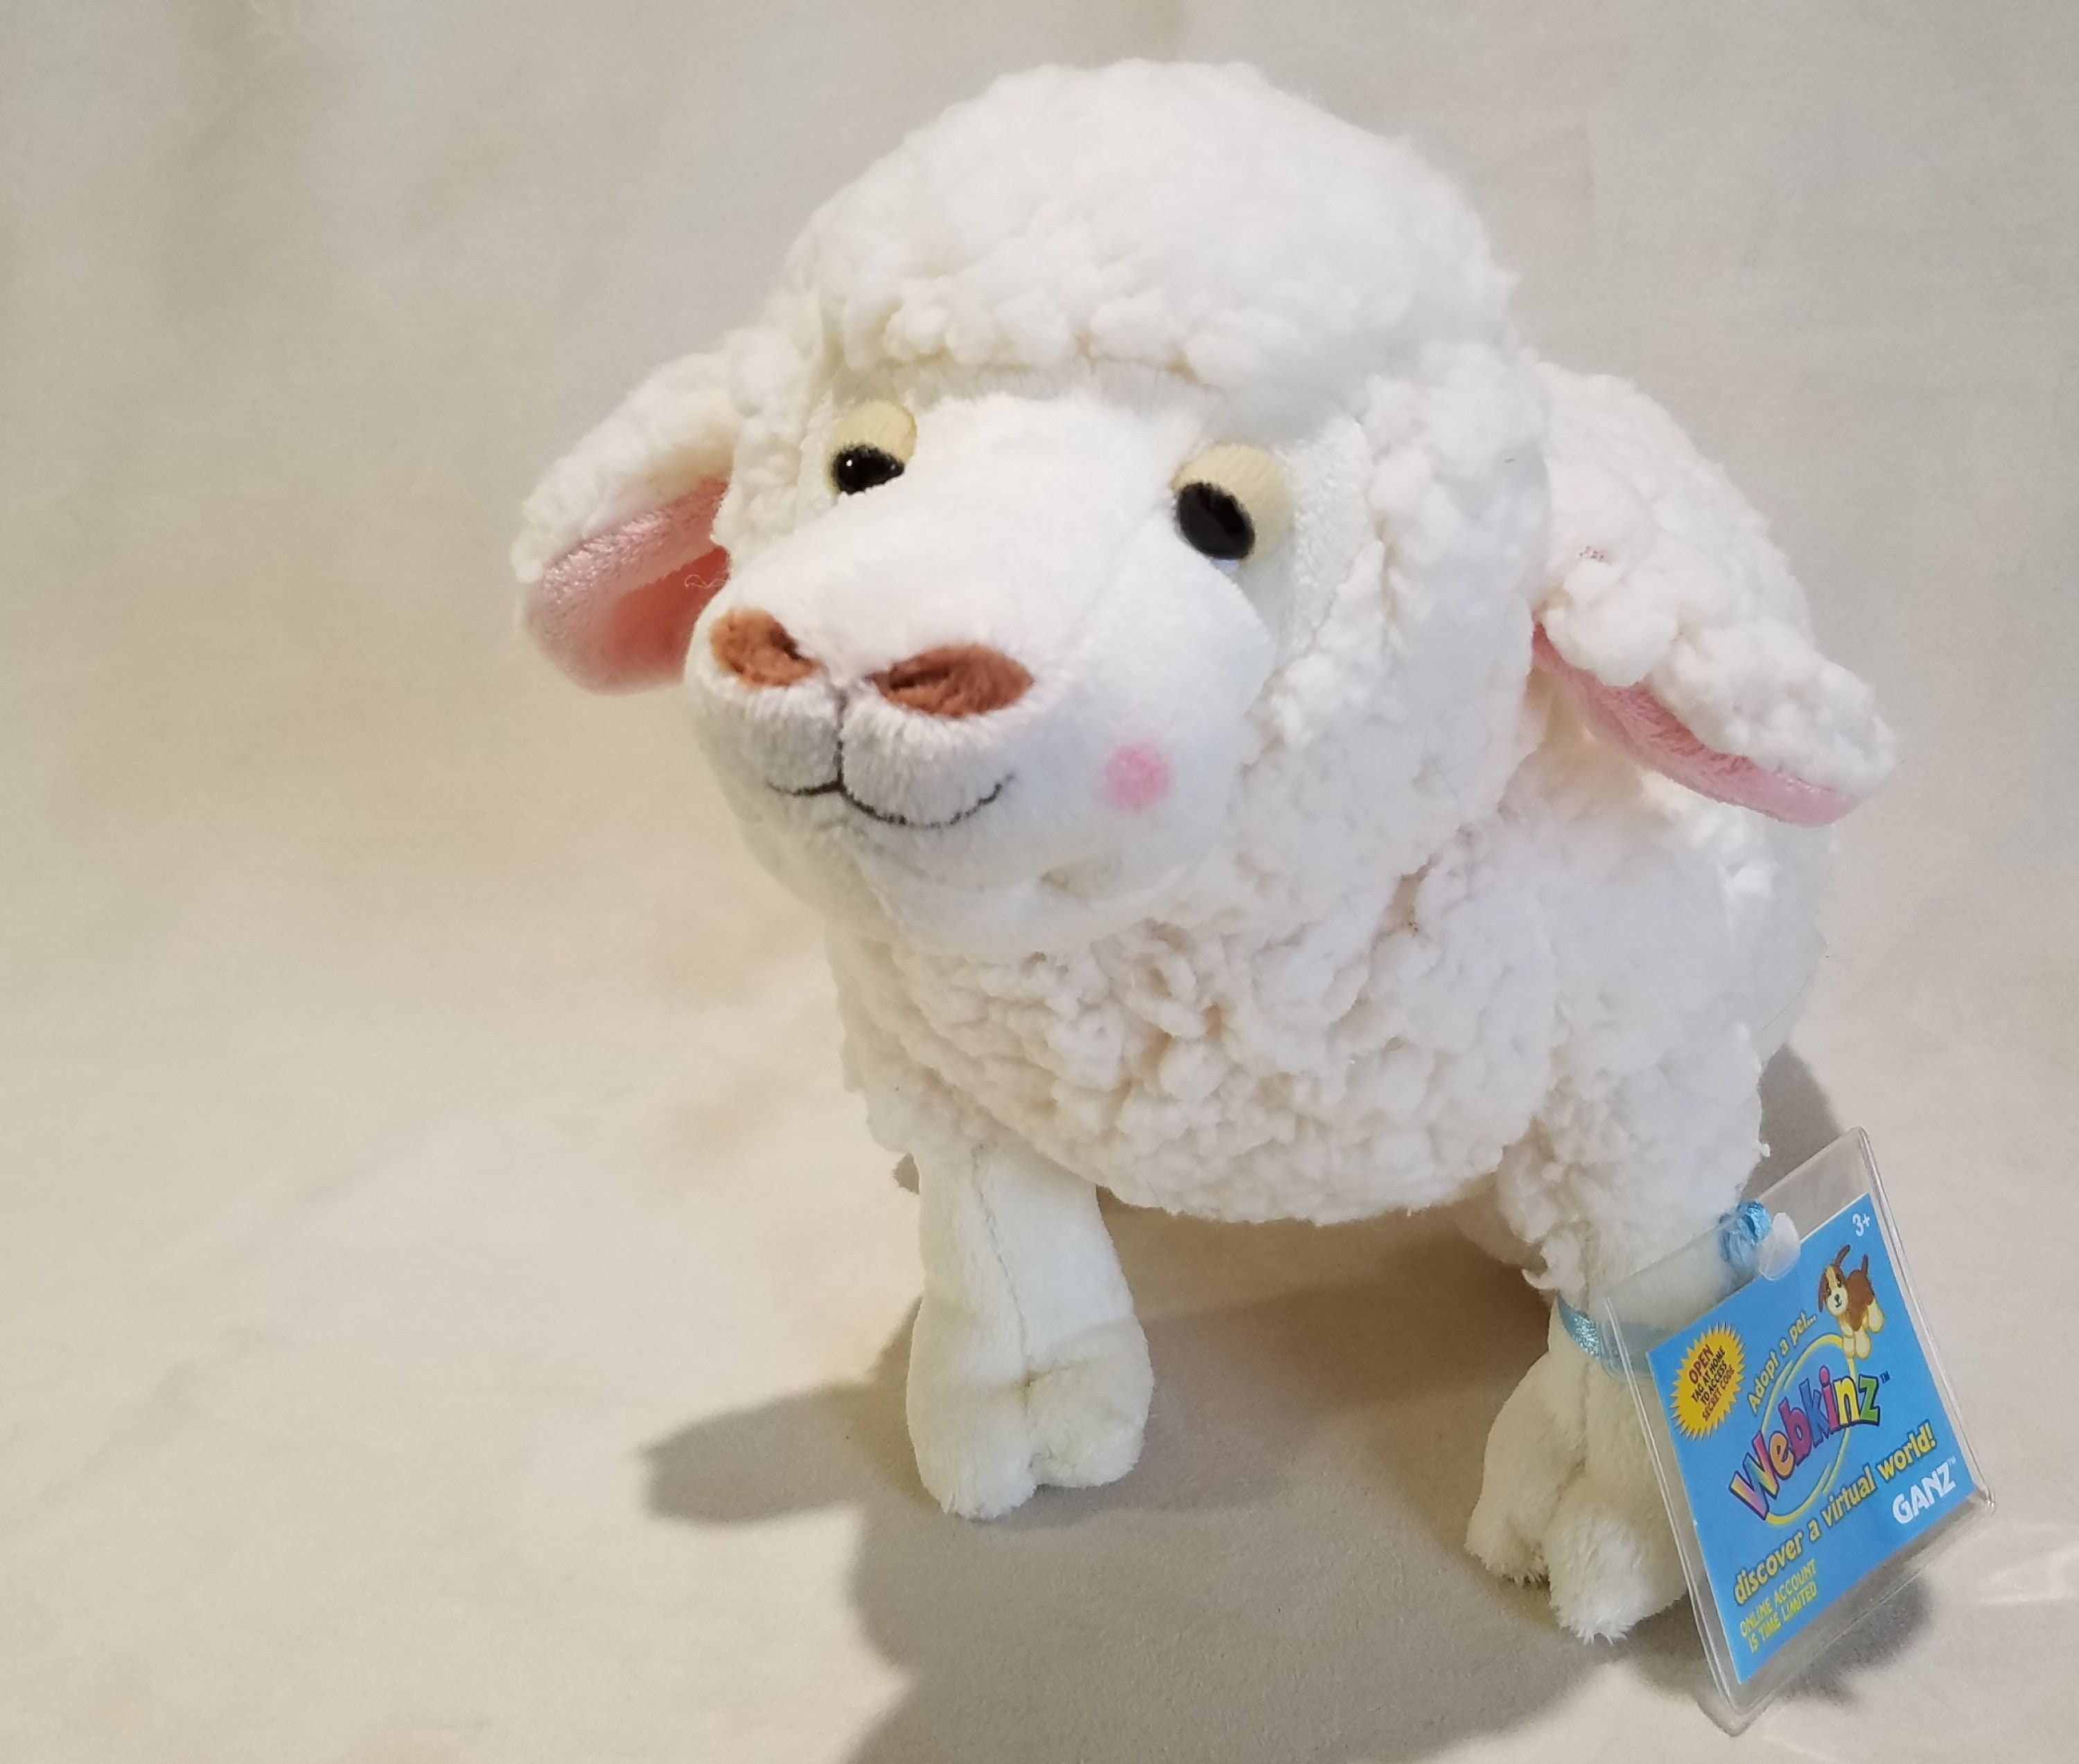 Webkinz Signature Small Lamb for sale online 